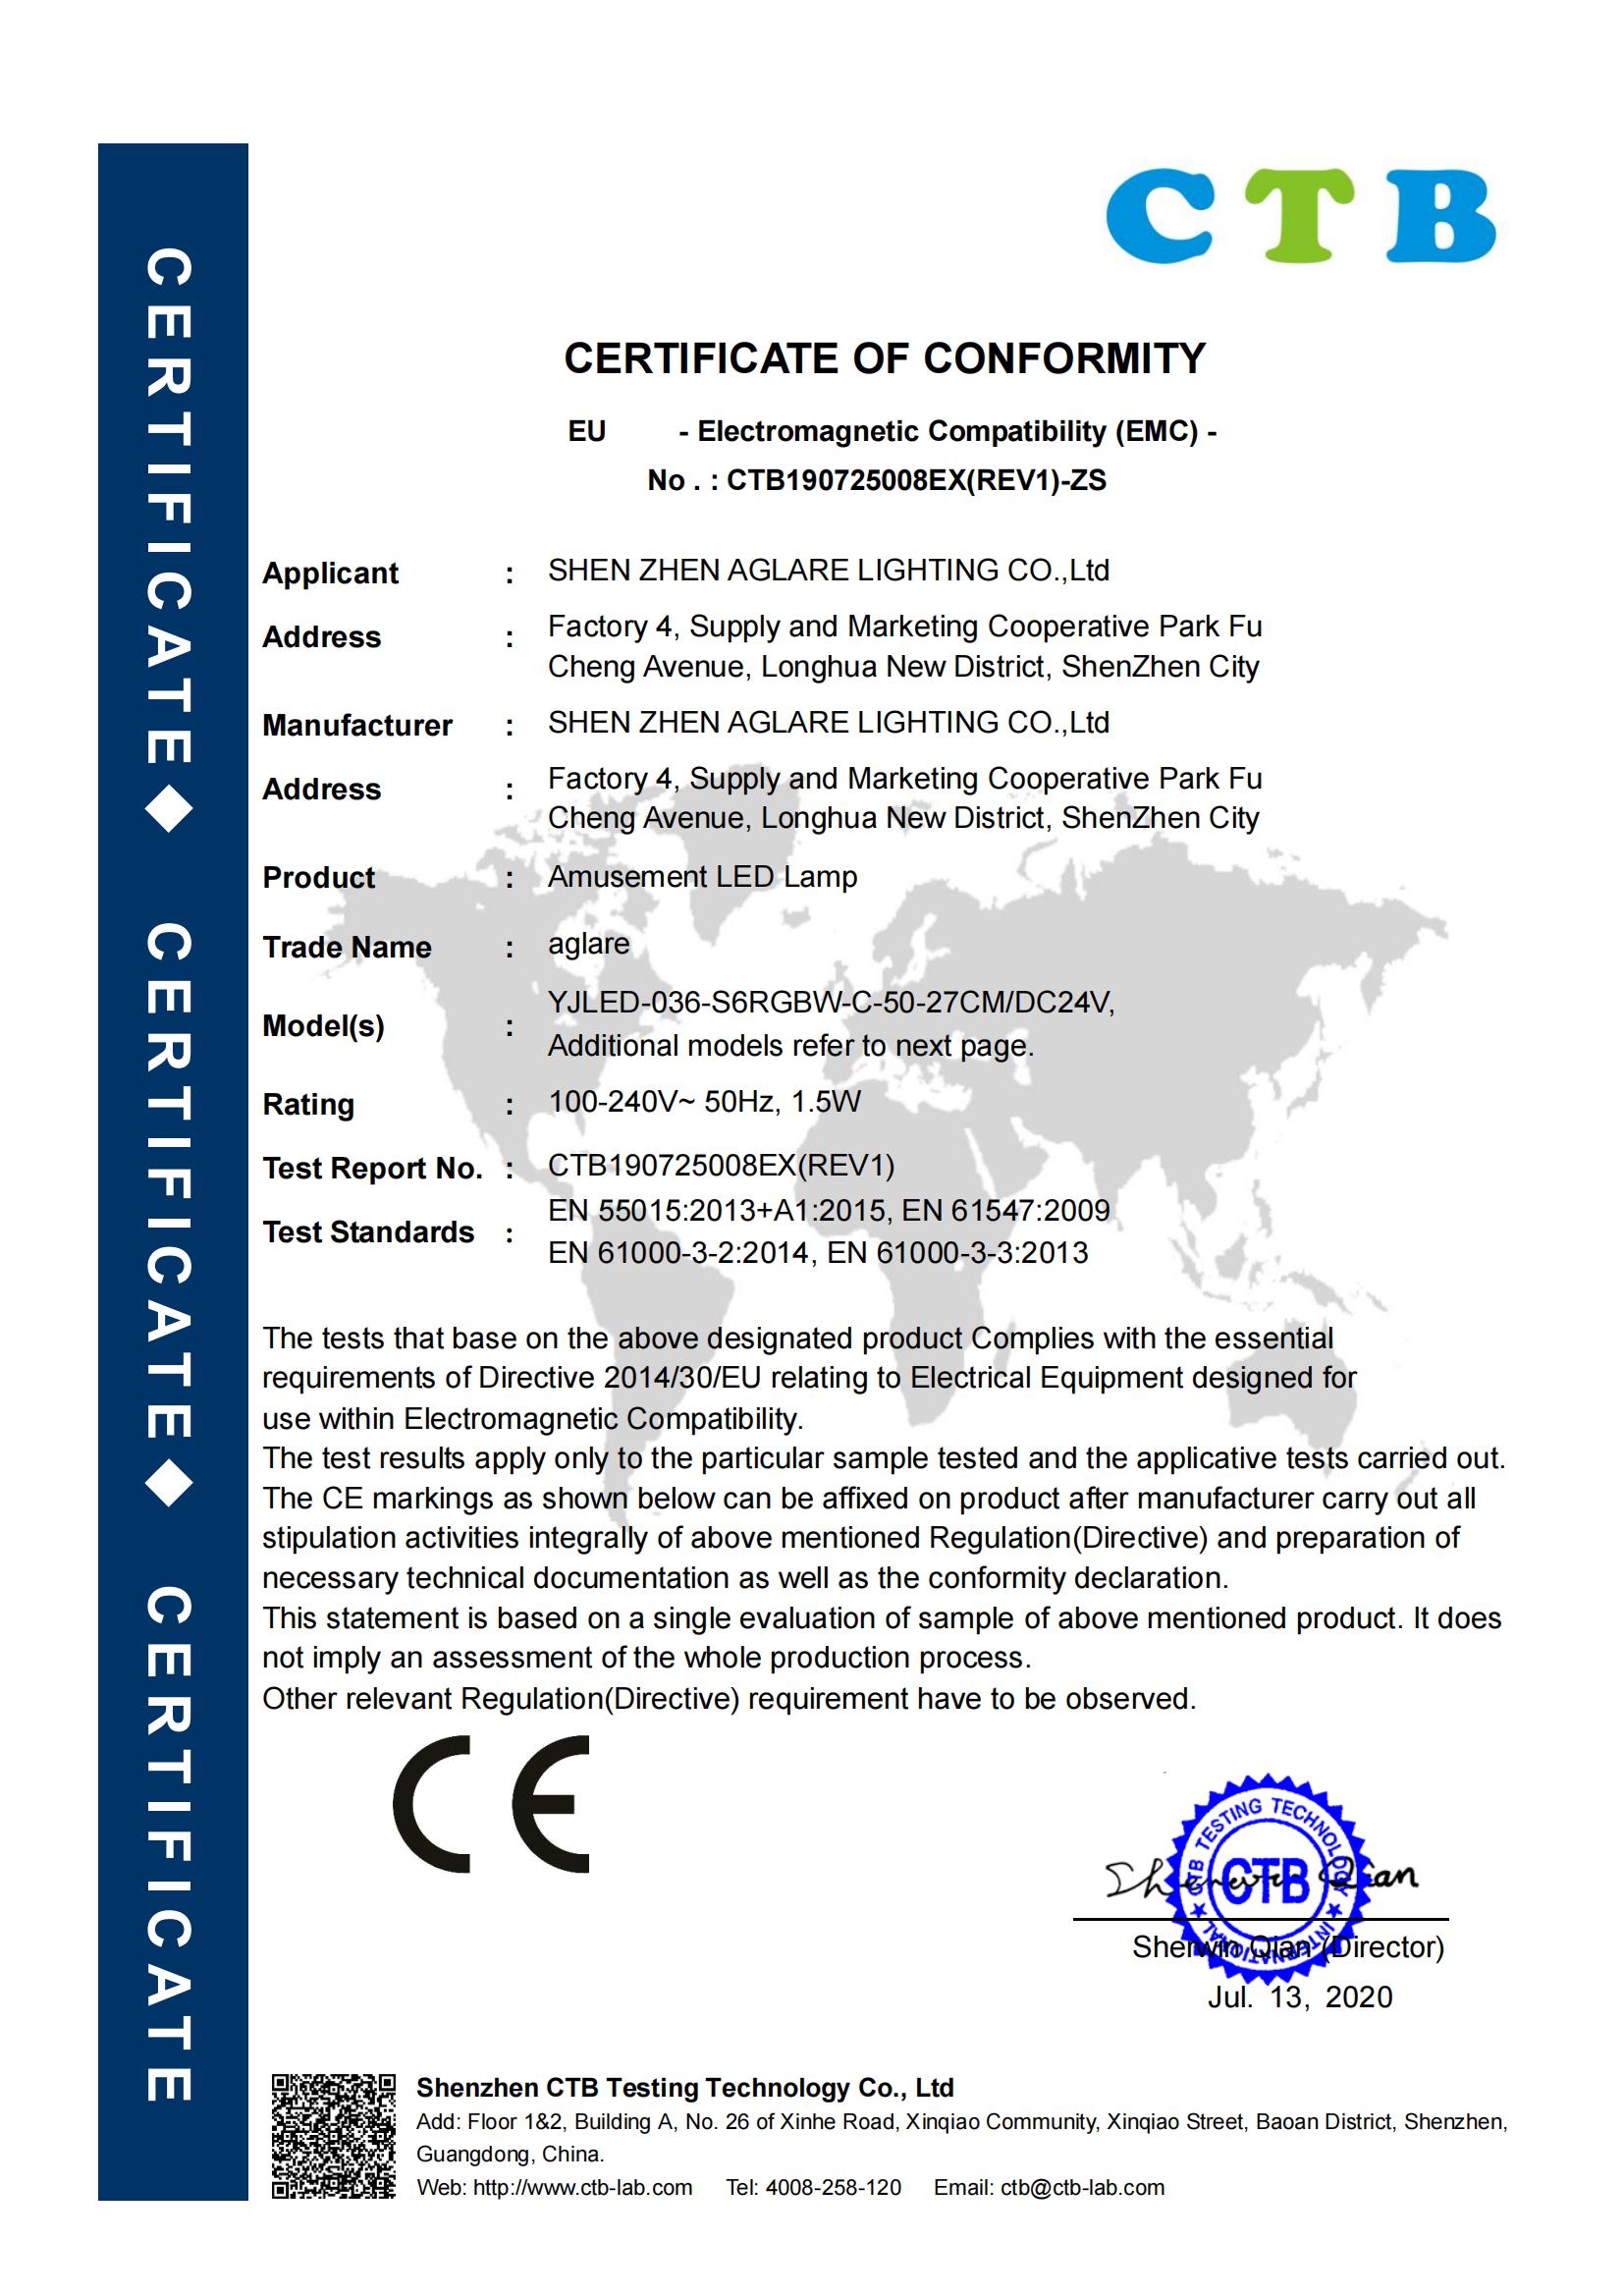 Aglare Lighting LED amusement lights passed CE-EMC certification Successfully!